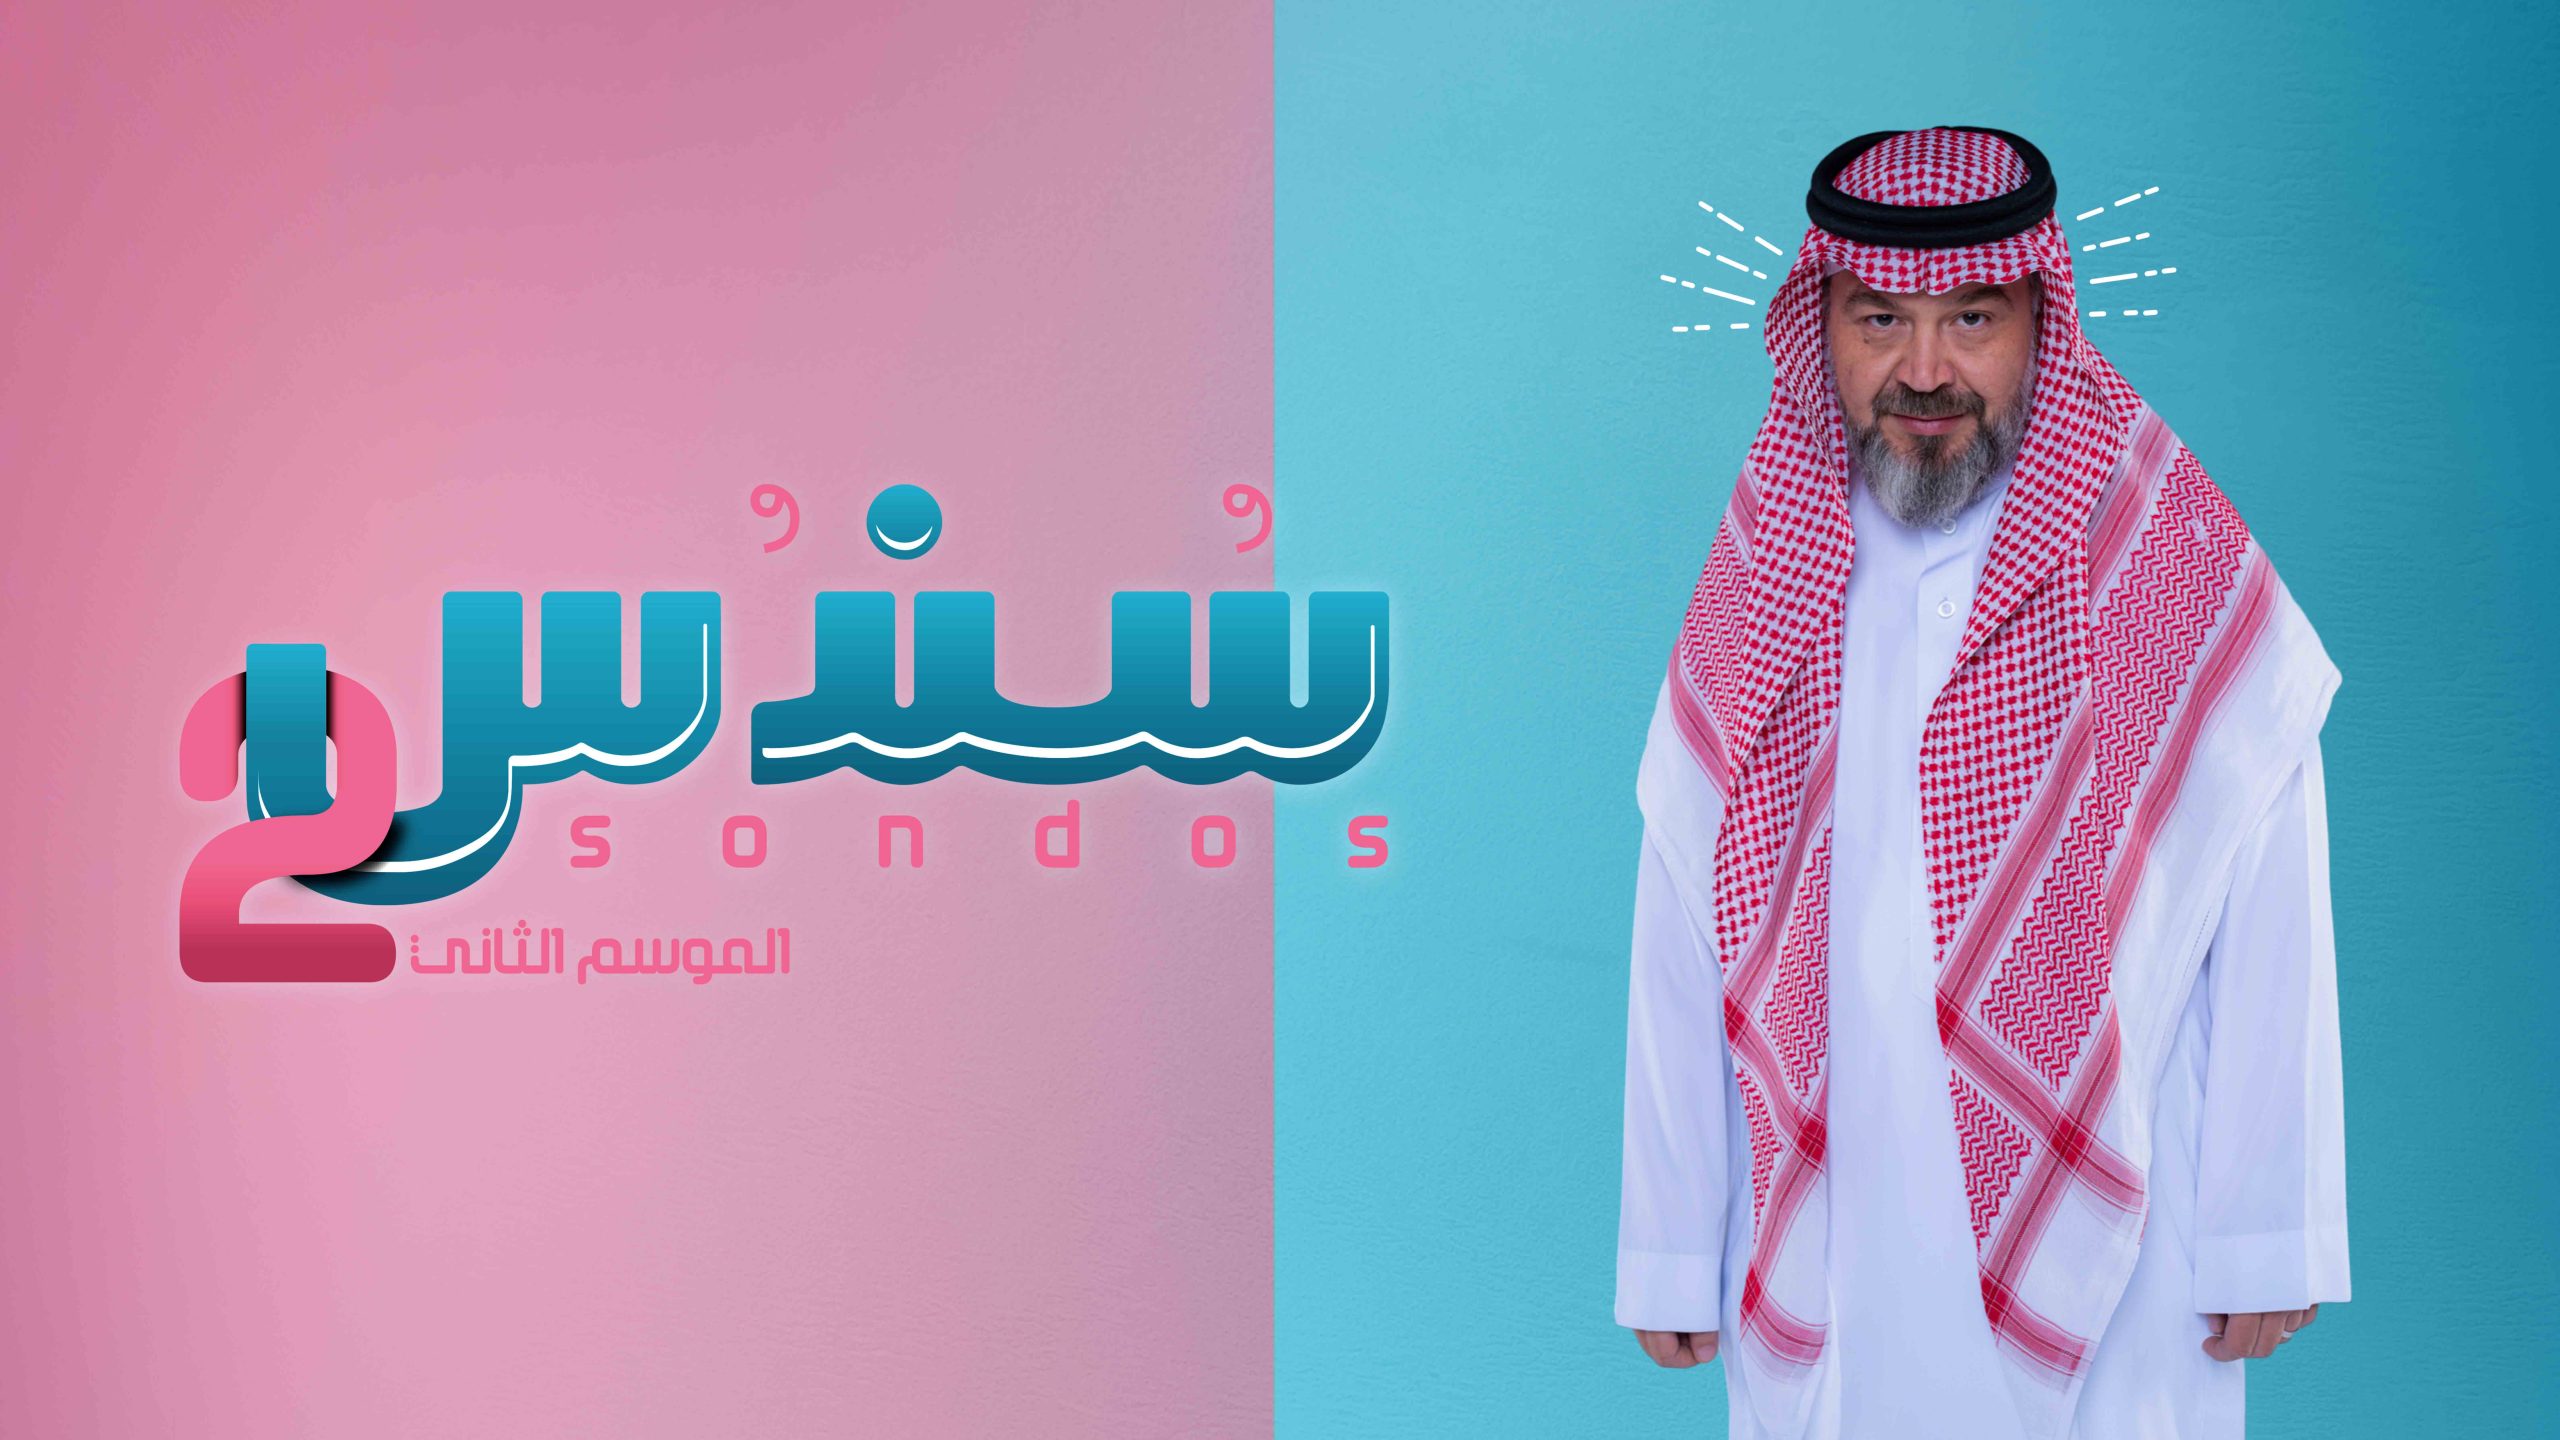 10 MBC1 Shahid سندس 2 رياض الصالحاني scaled